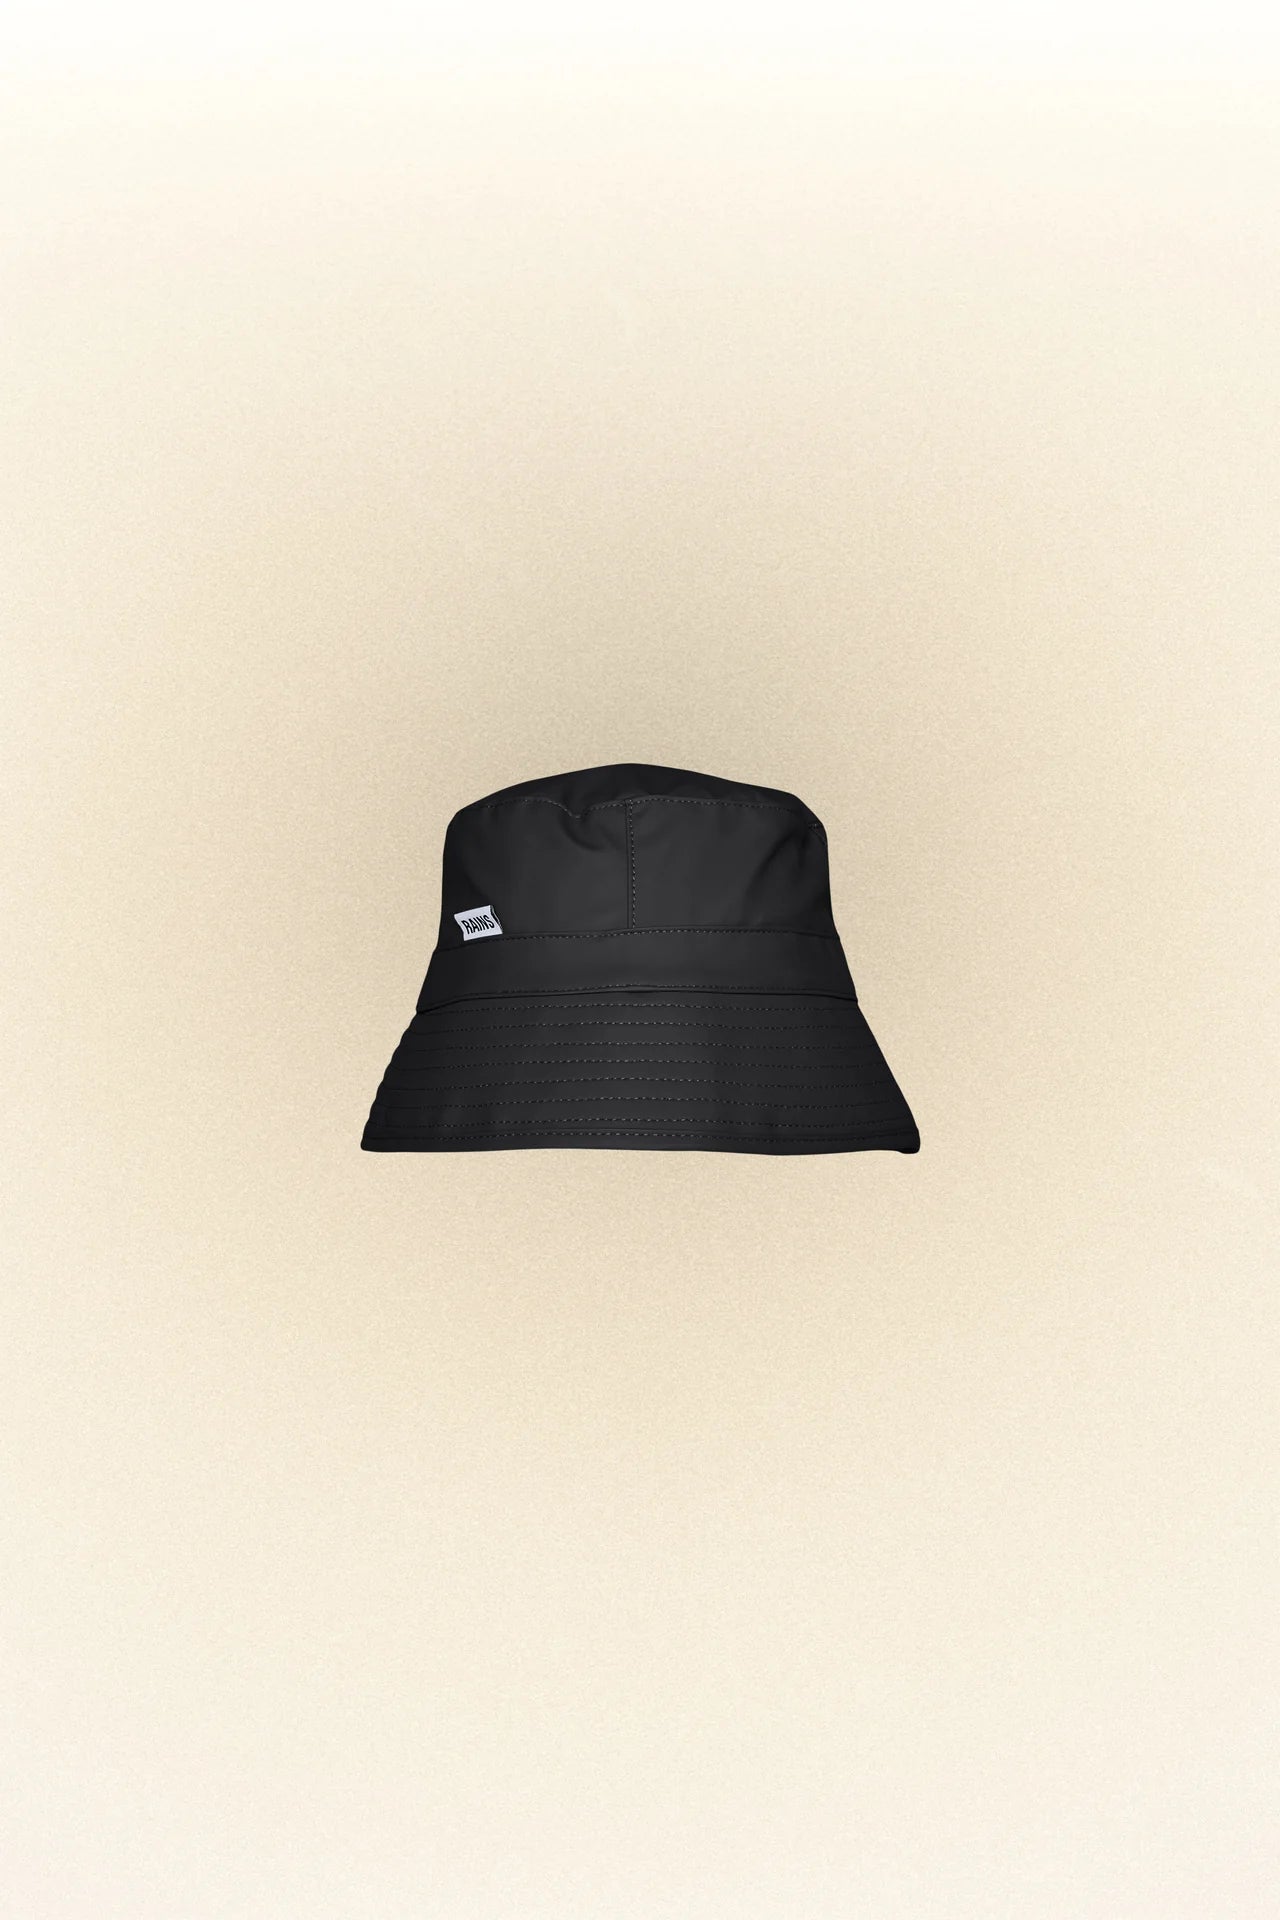 A waterproof black Rains Bucket Hat on a white background.